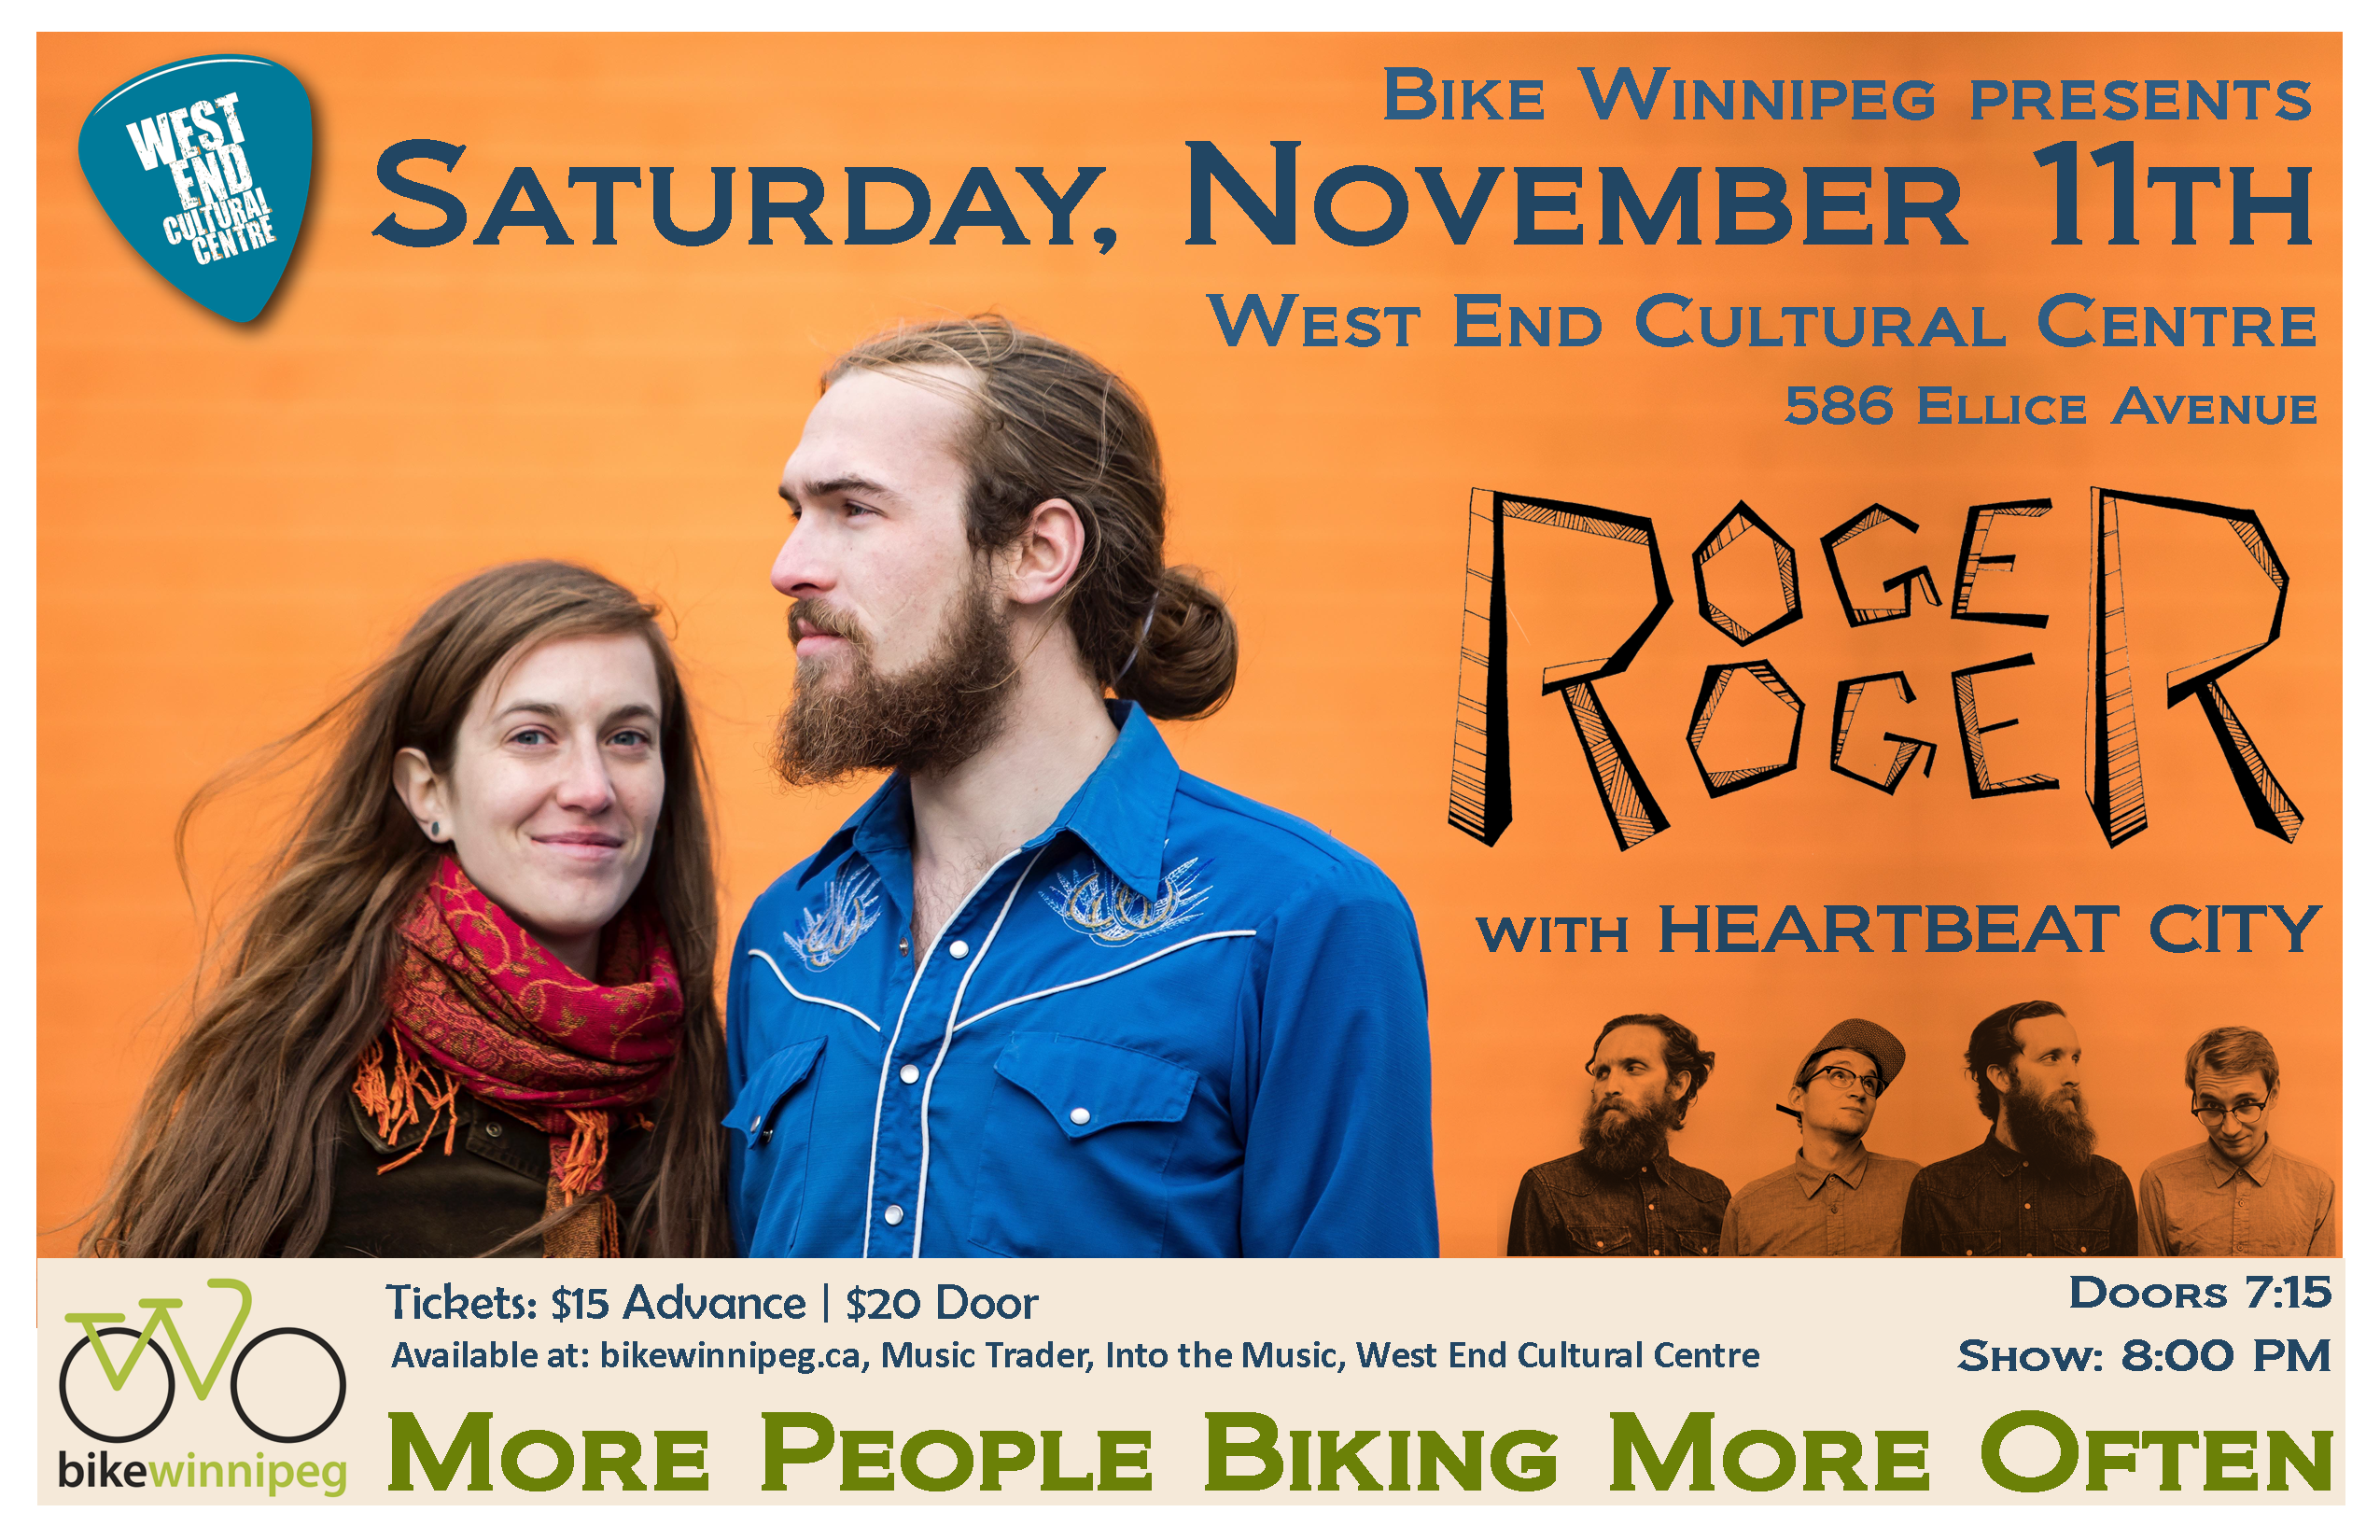 Bike Winnipeg presents Roger Roger with Heartbeat City